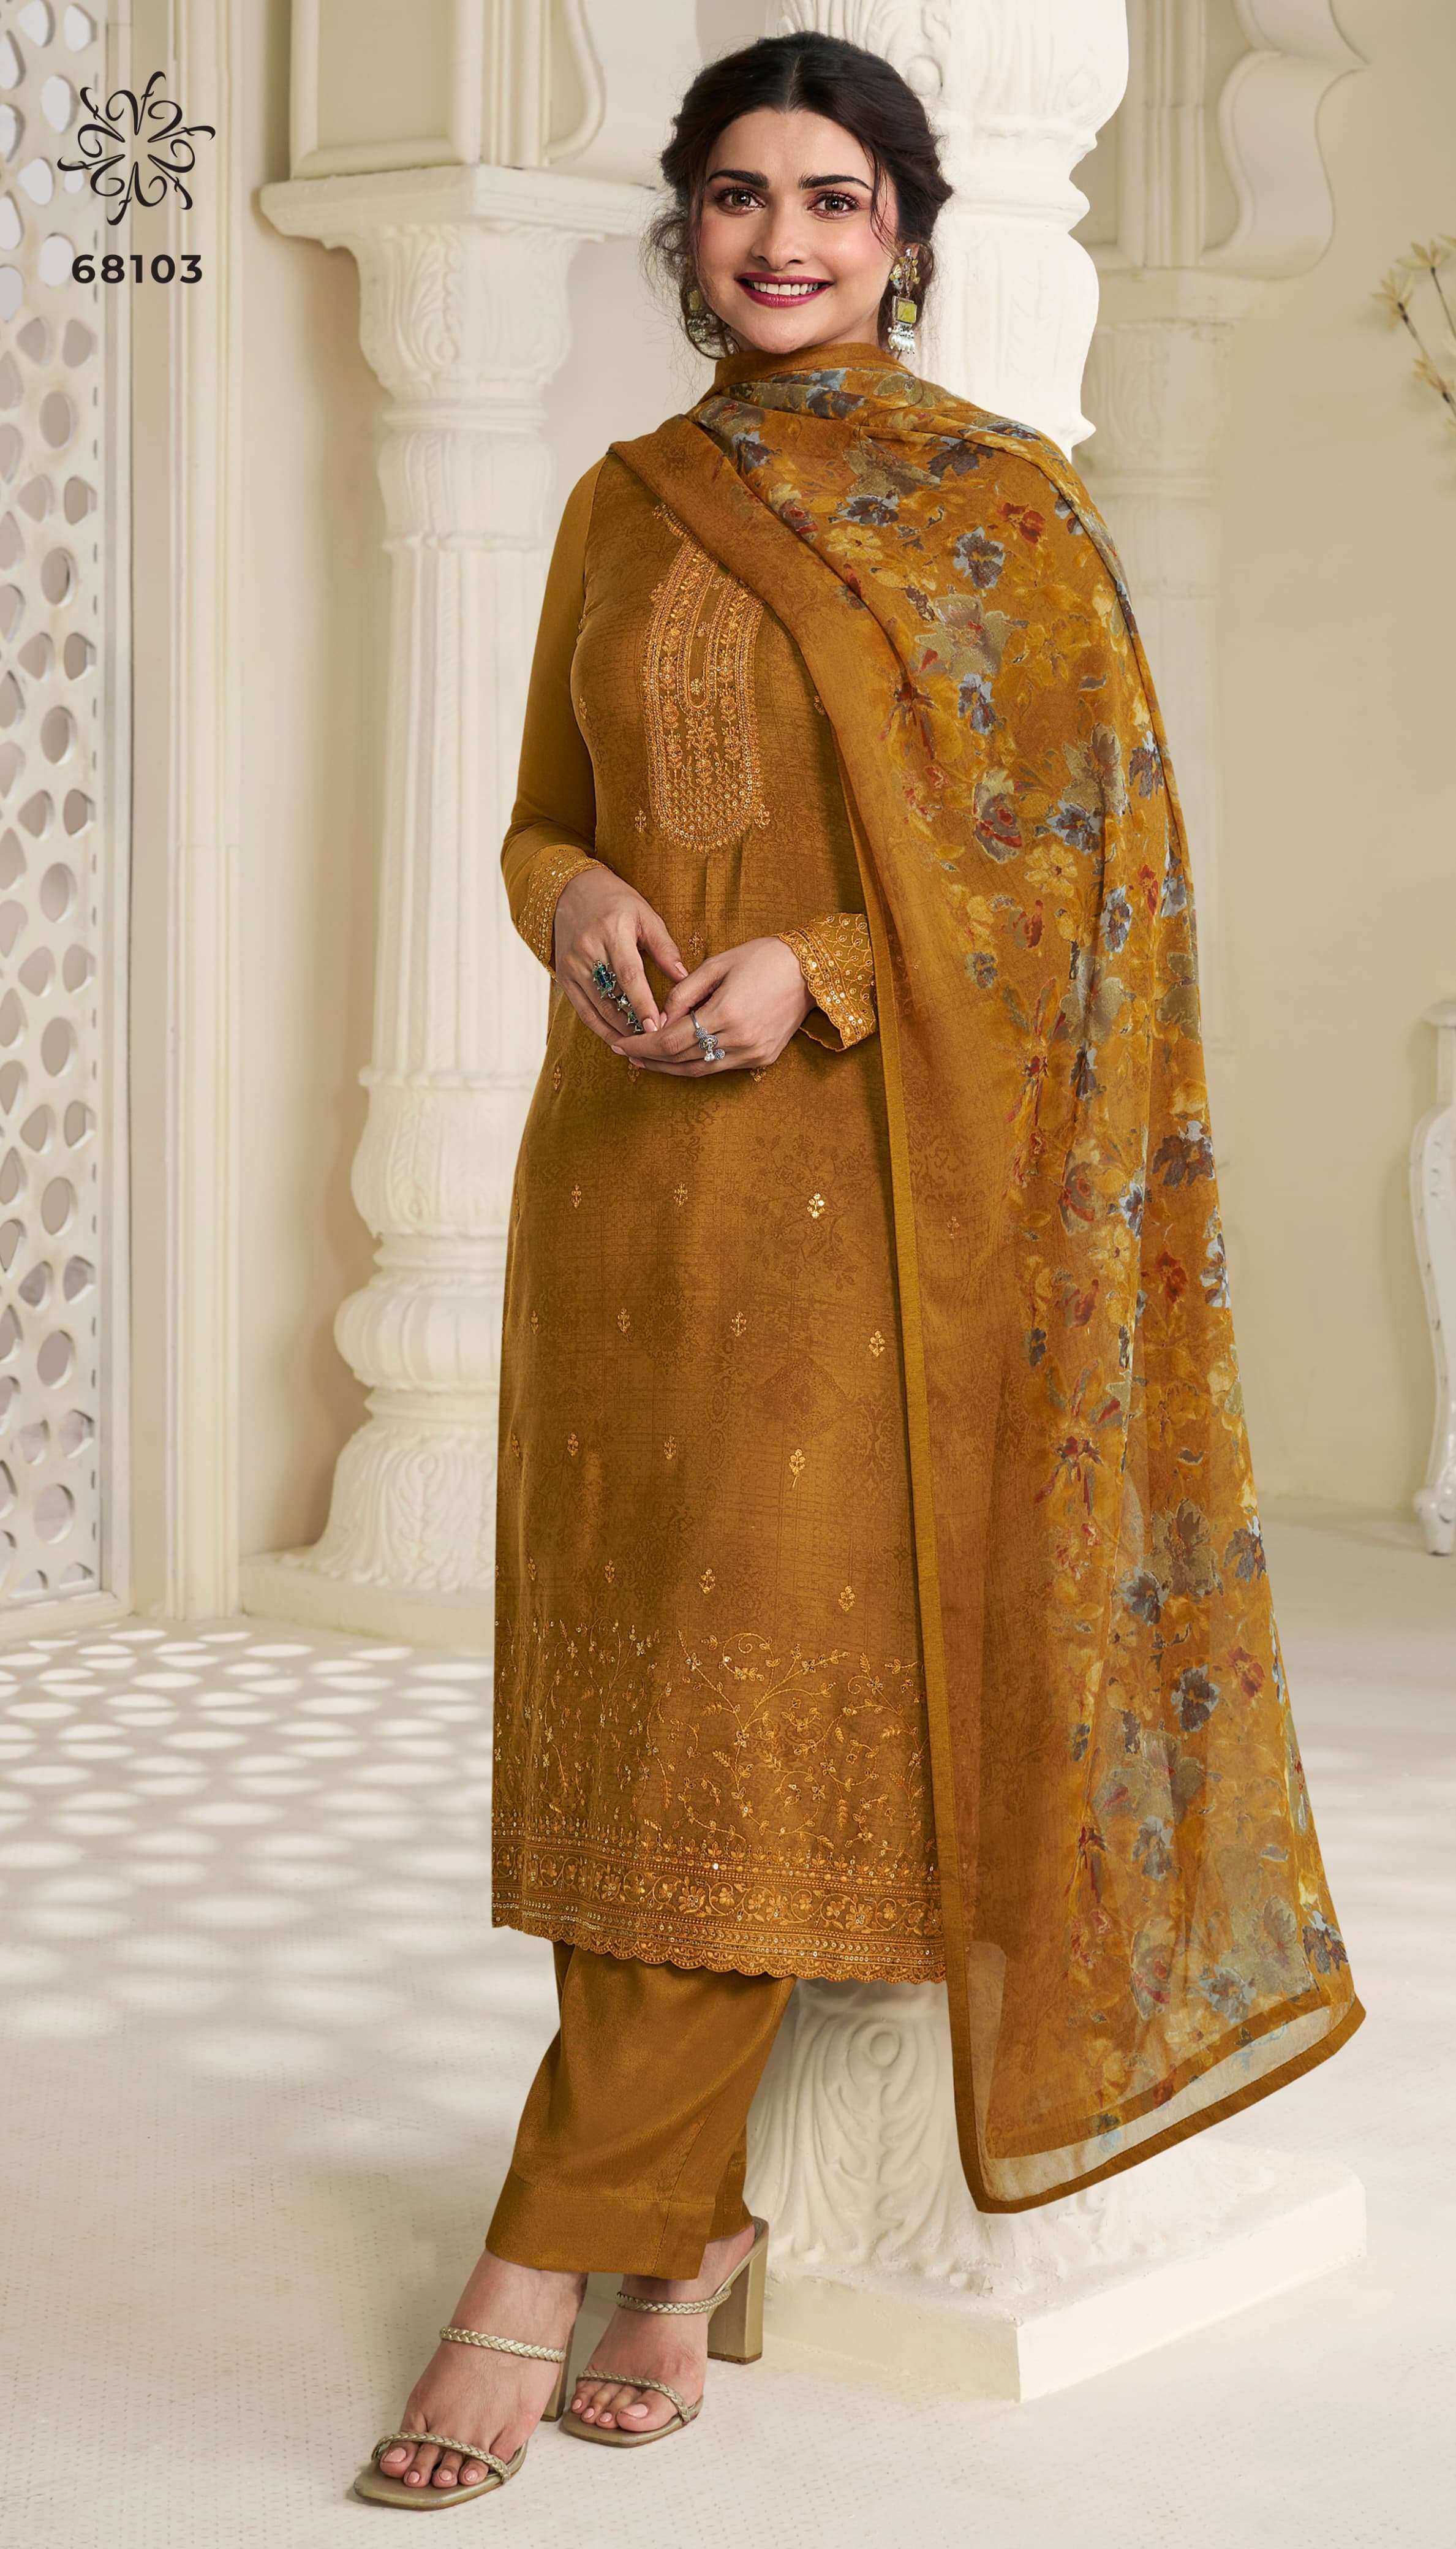 vinay fashion silkina royal crepe 45 digital print royal crape catchy look salwar suit catalog